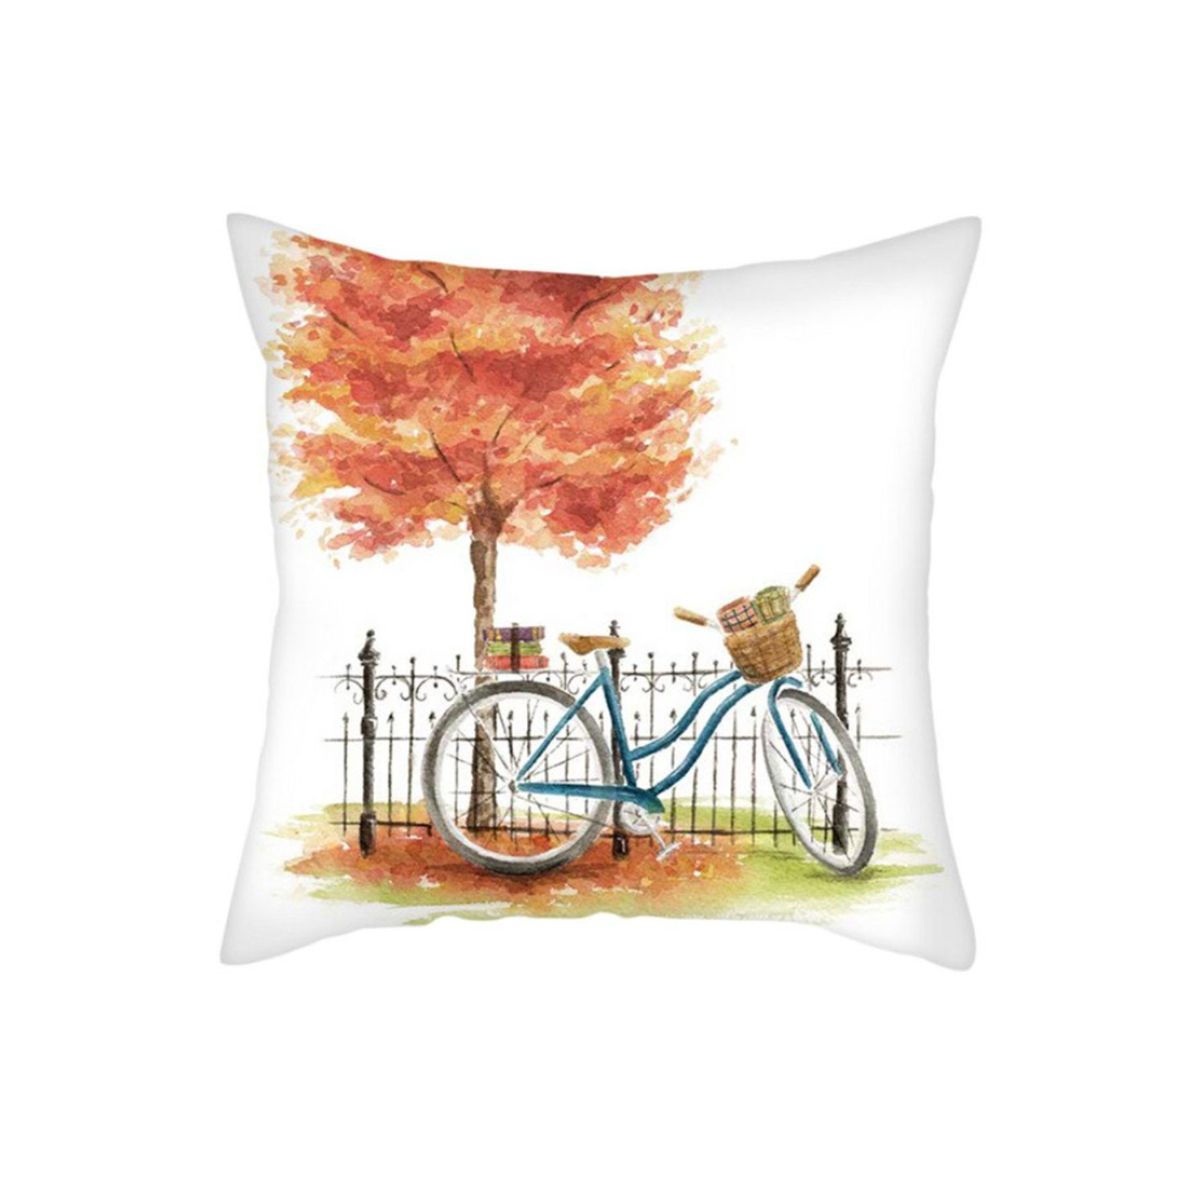 White Bicycle Cushion with Orange Tree